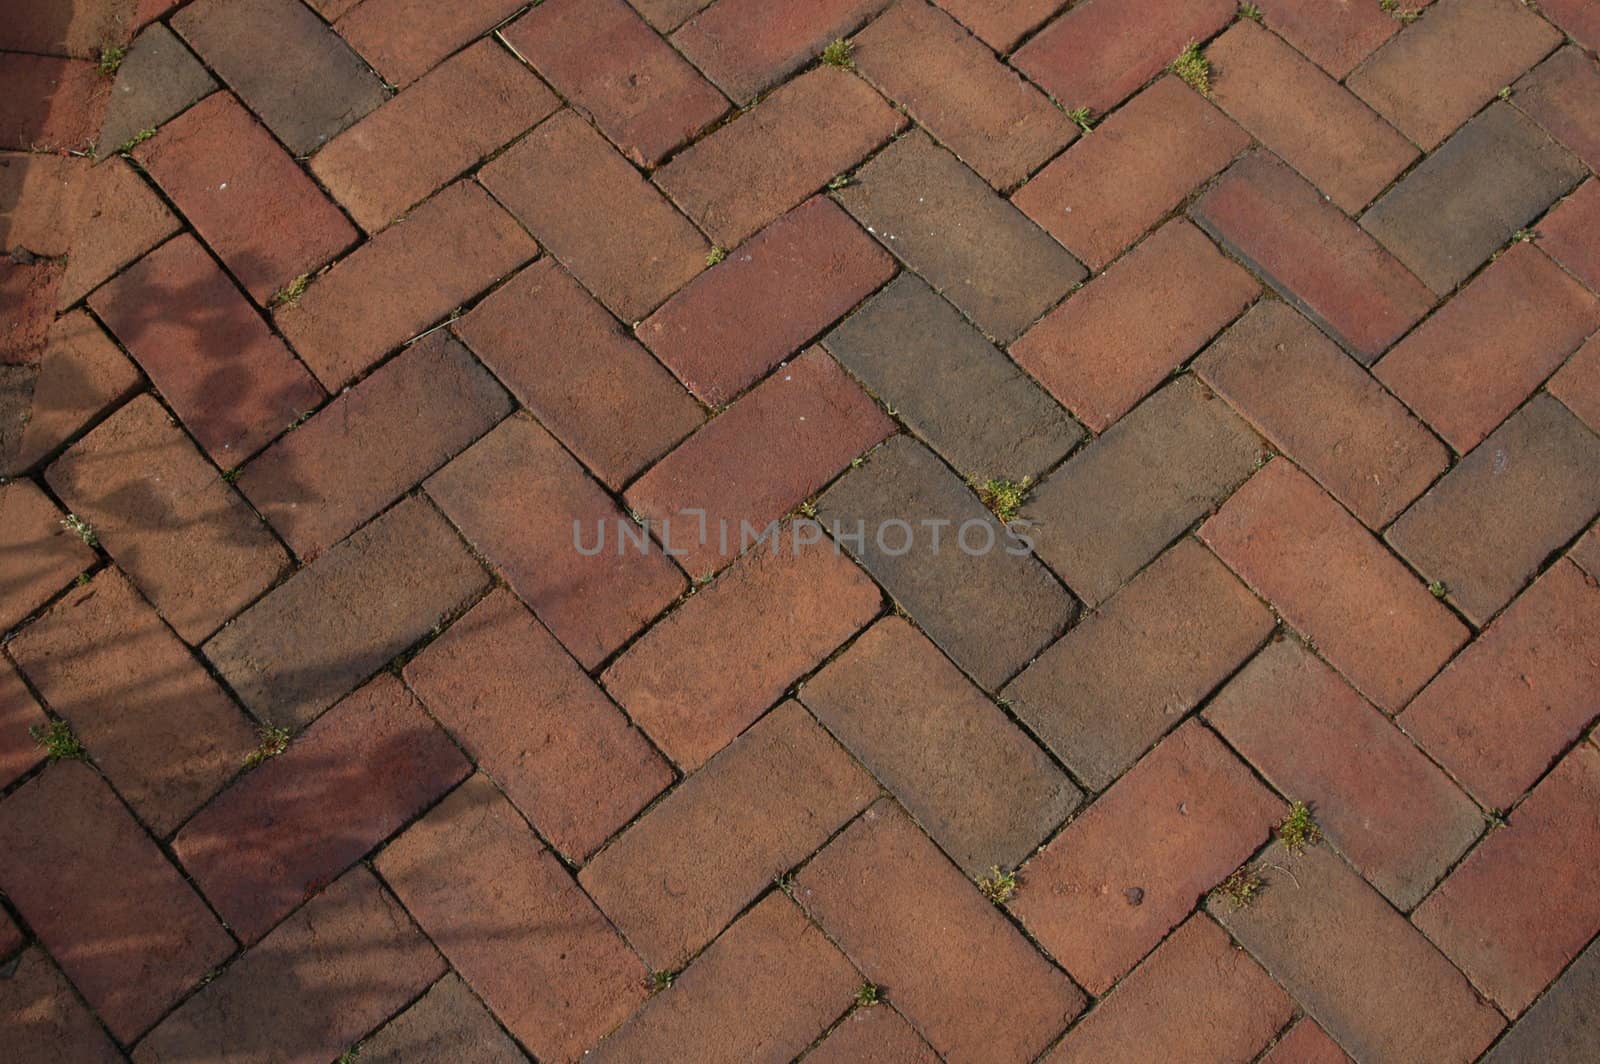 closeup of a brick walkway with a crisscross pattern